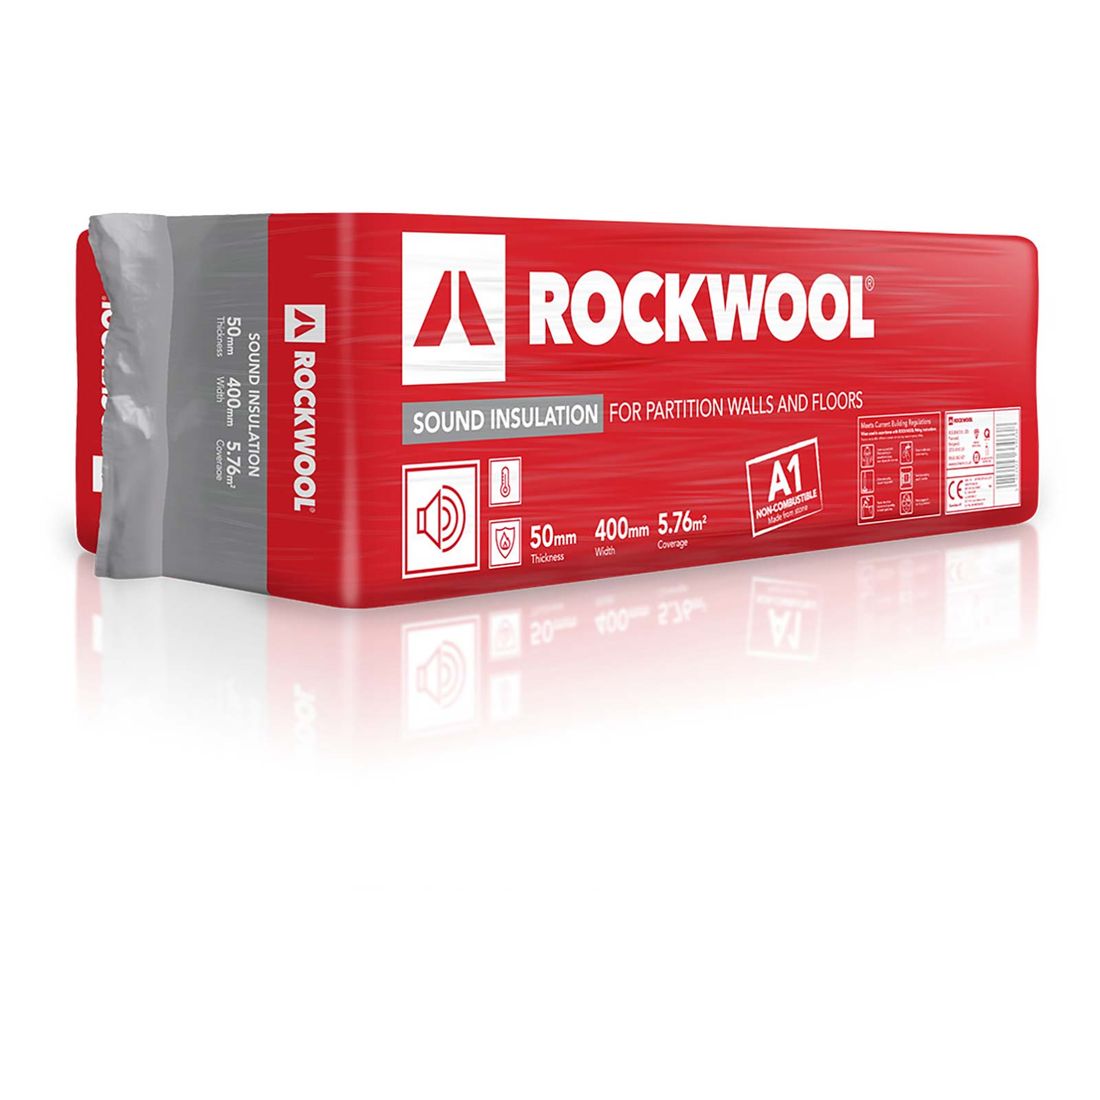 Rockwool Sound Insulation Slab 1200 X 400 X 50Mm Pk12 5.76M2